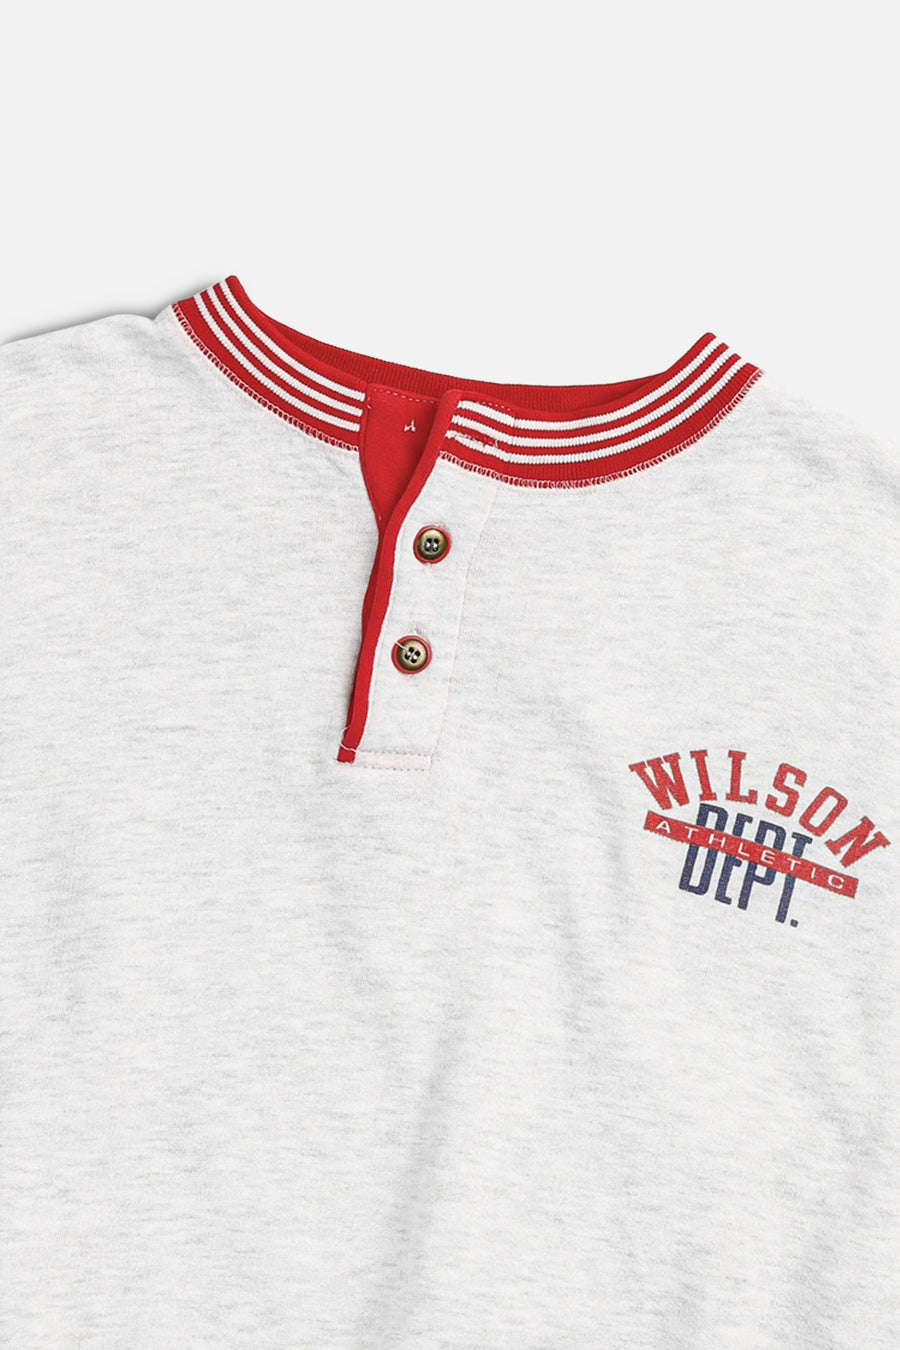 Vintage Wilson Sweatshirt - S